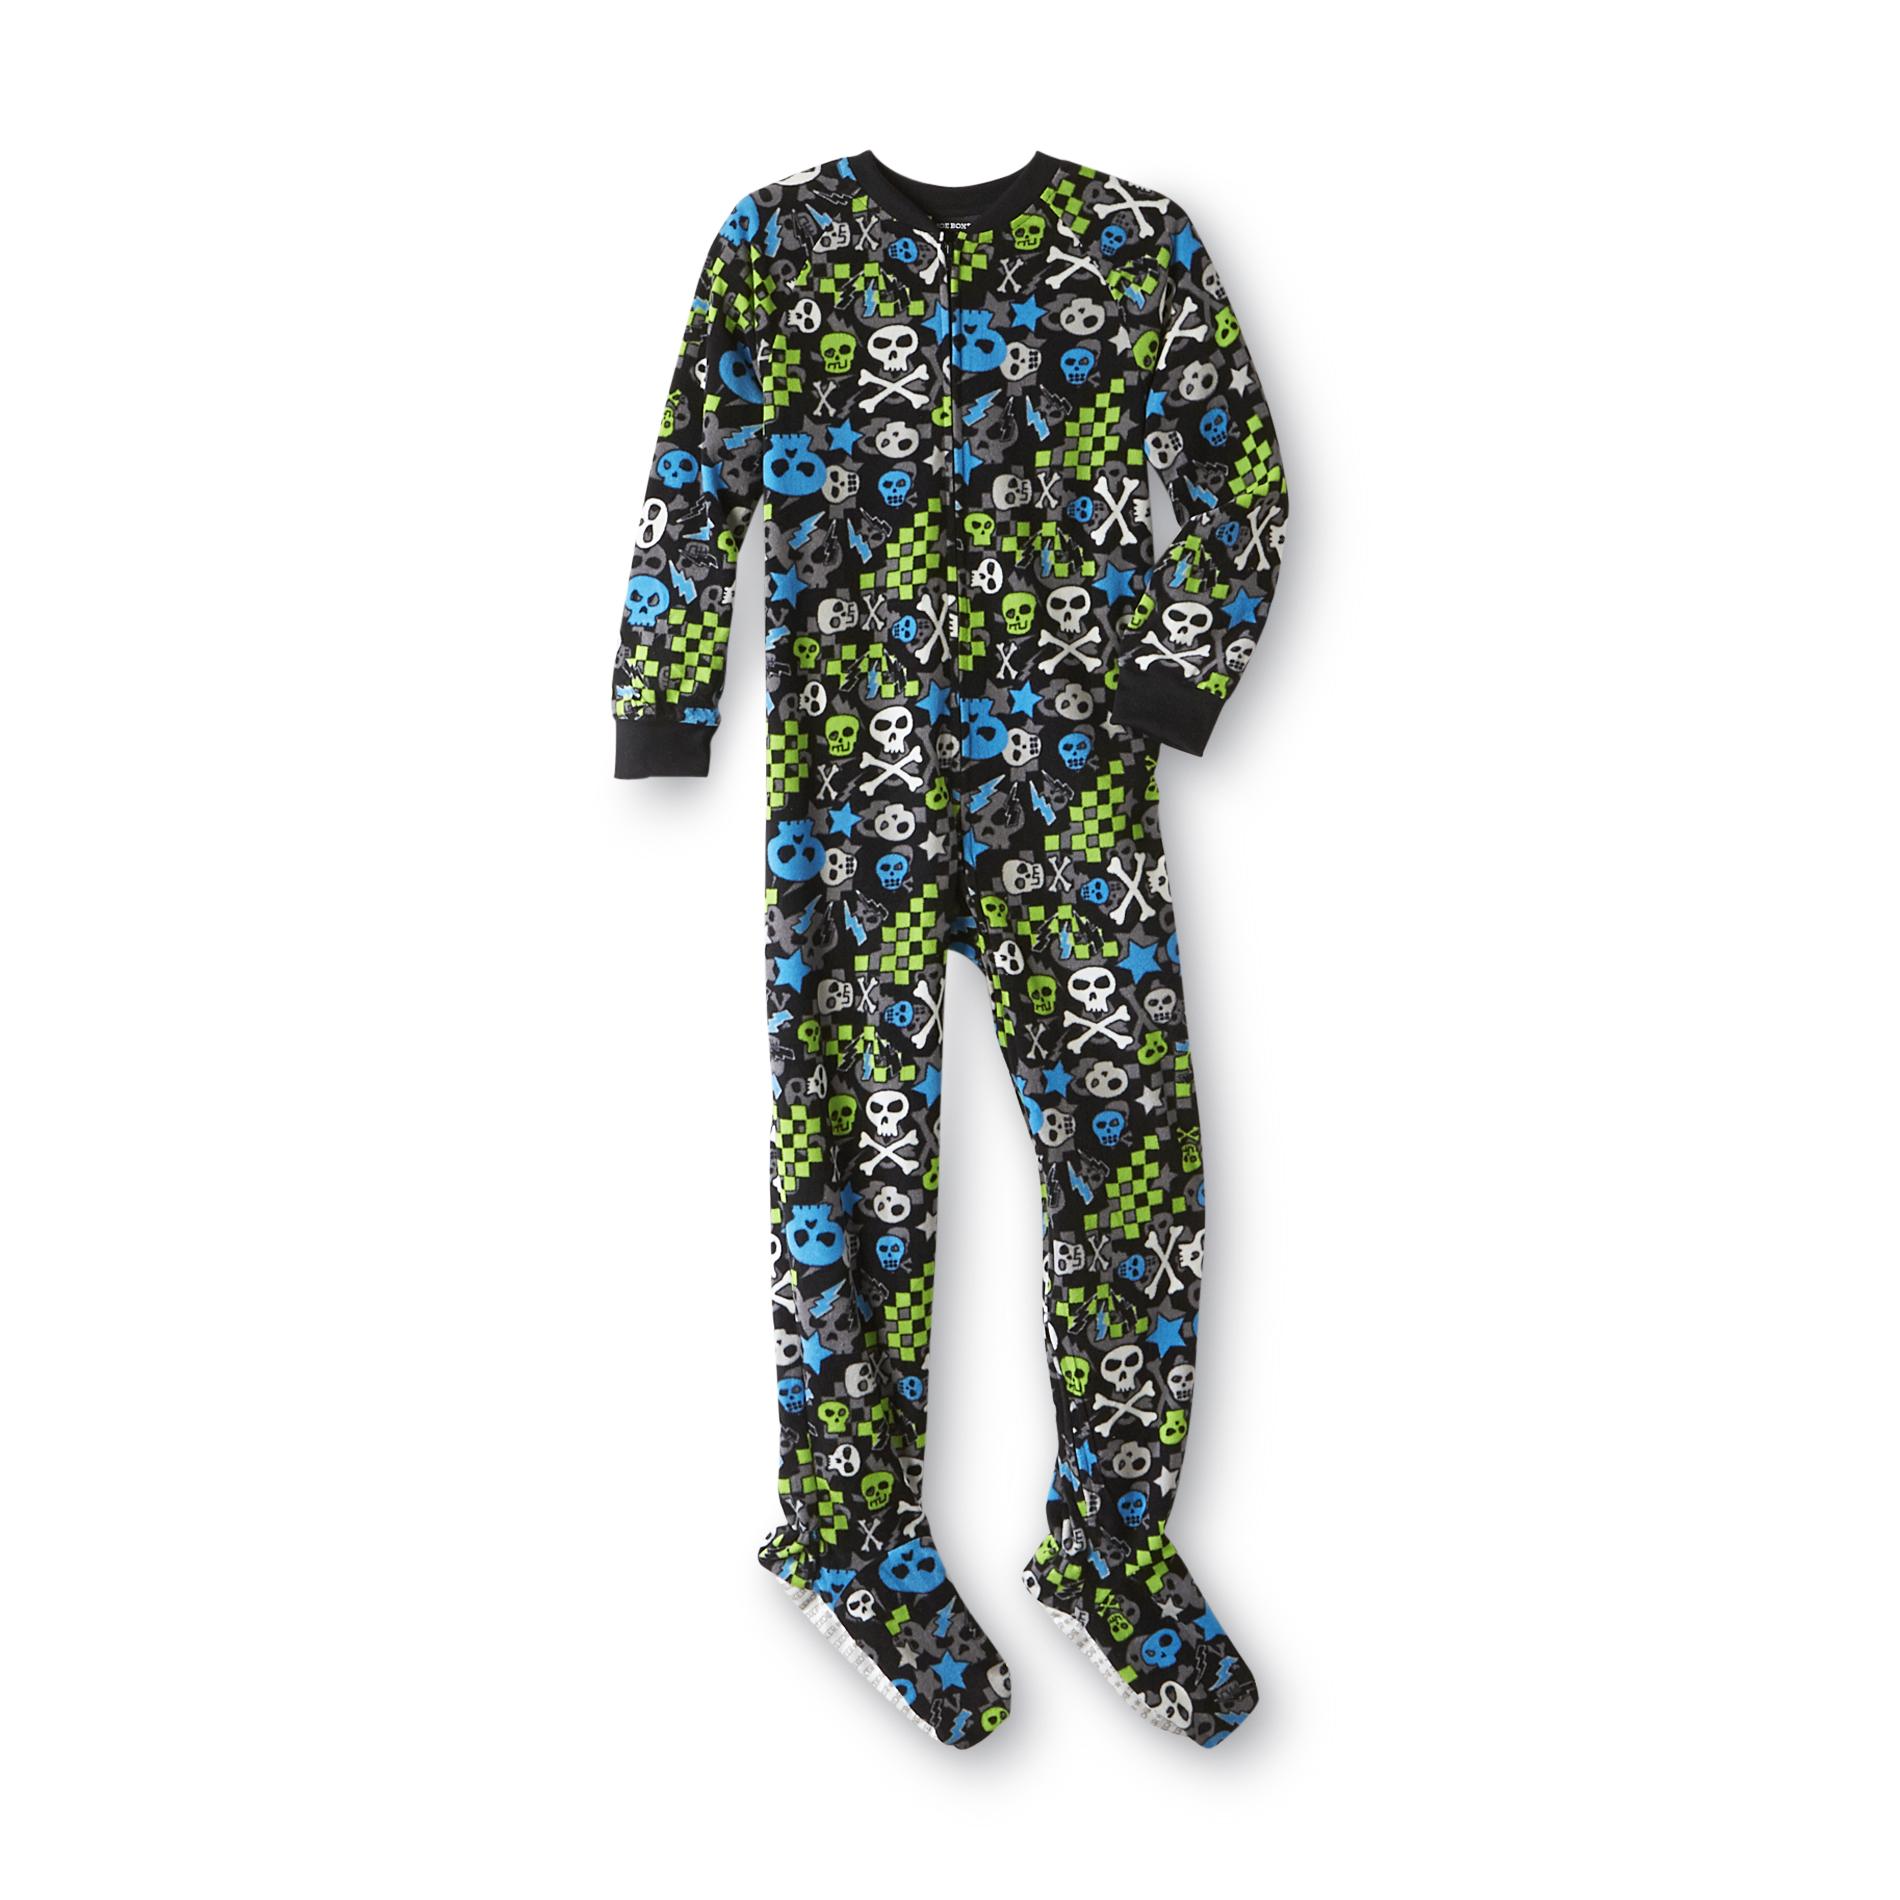 Joe Boxer Boy's Fleece One-Piece Footie Pajamas - Skulls